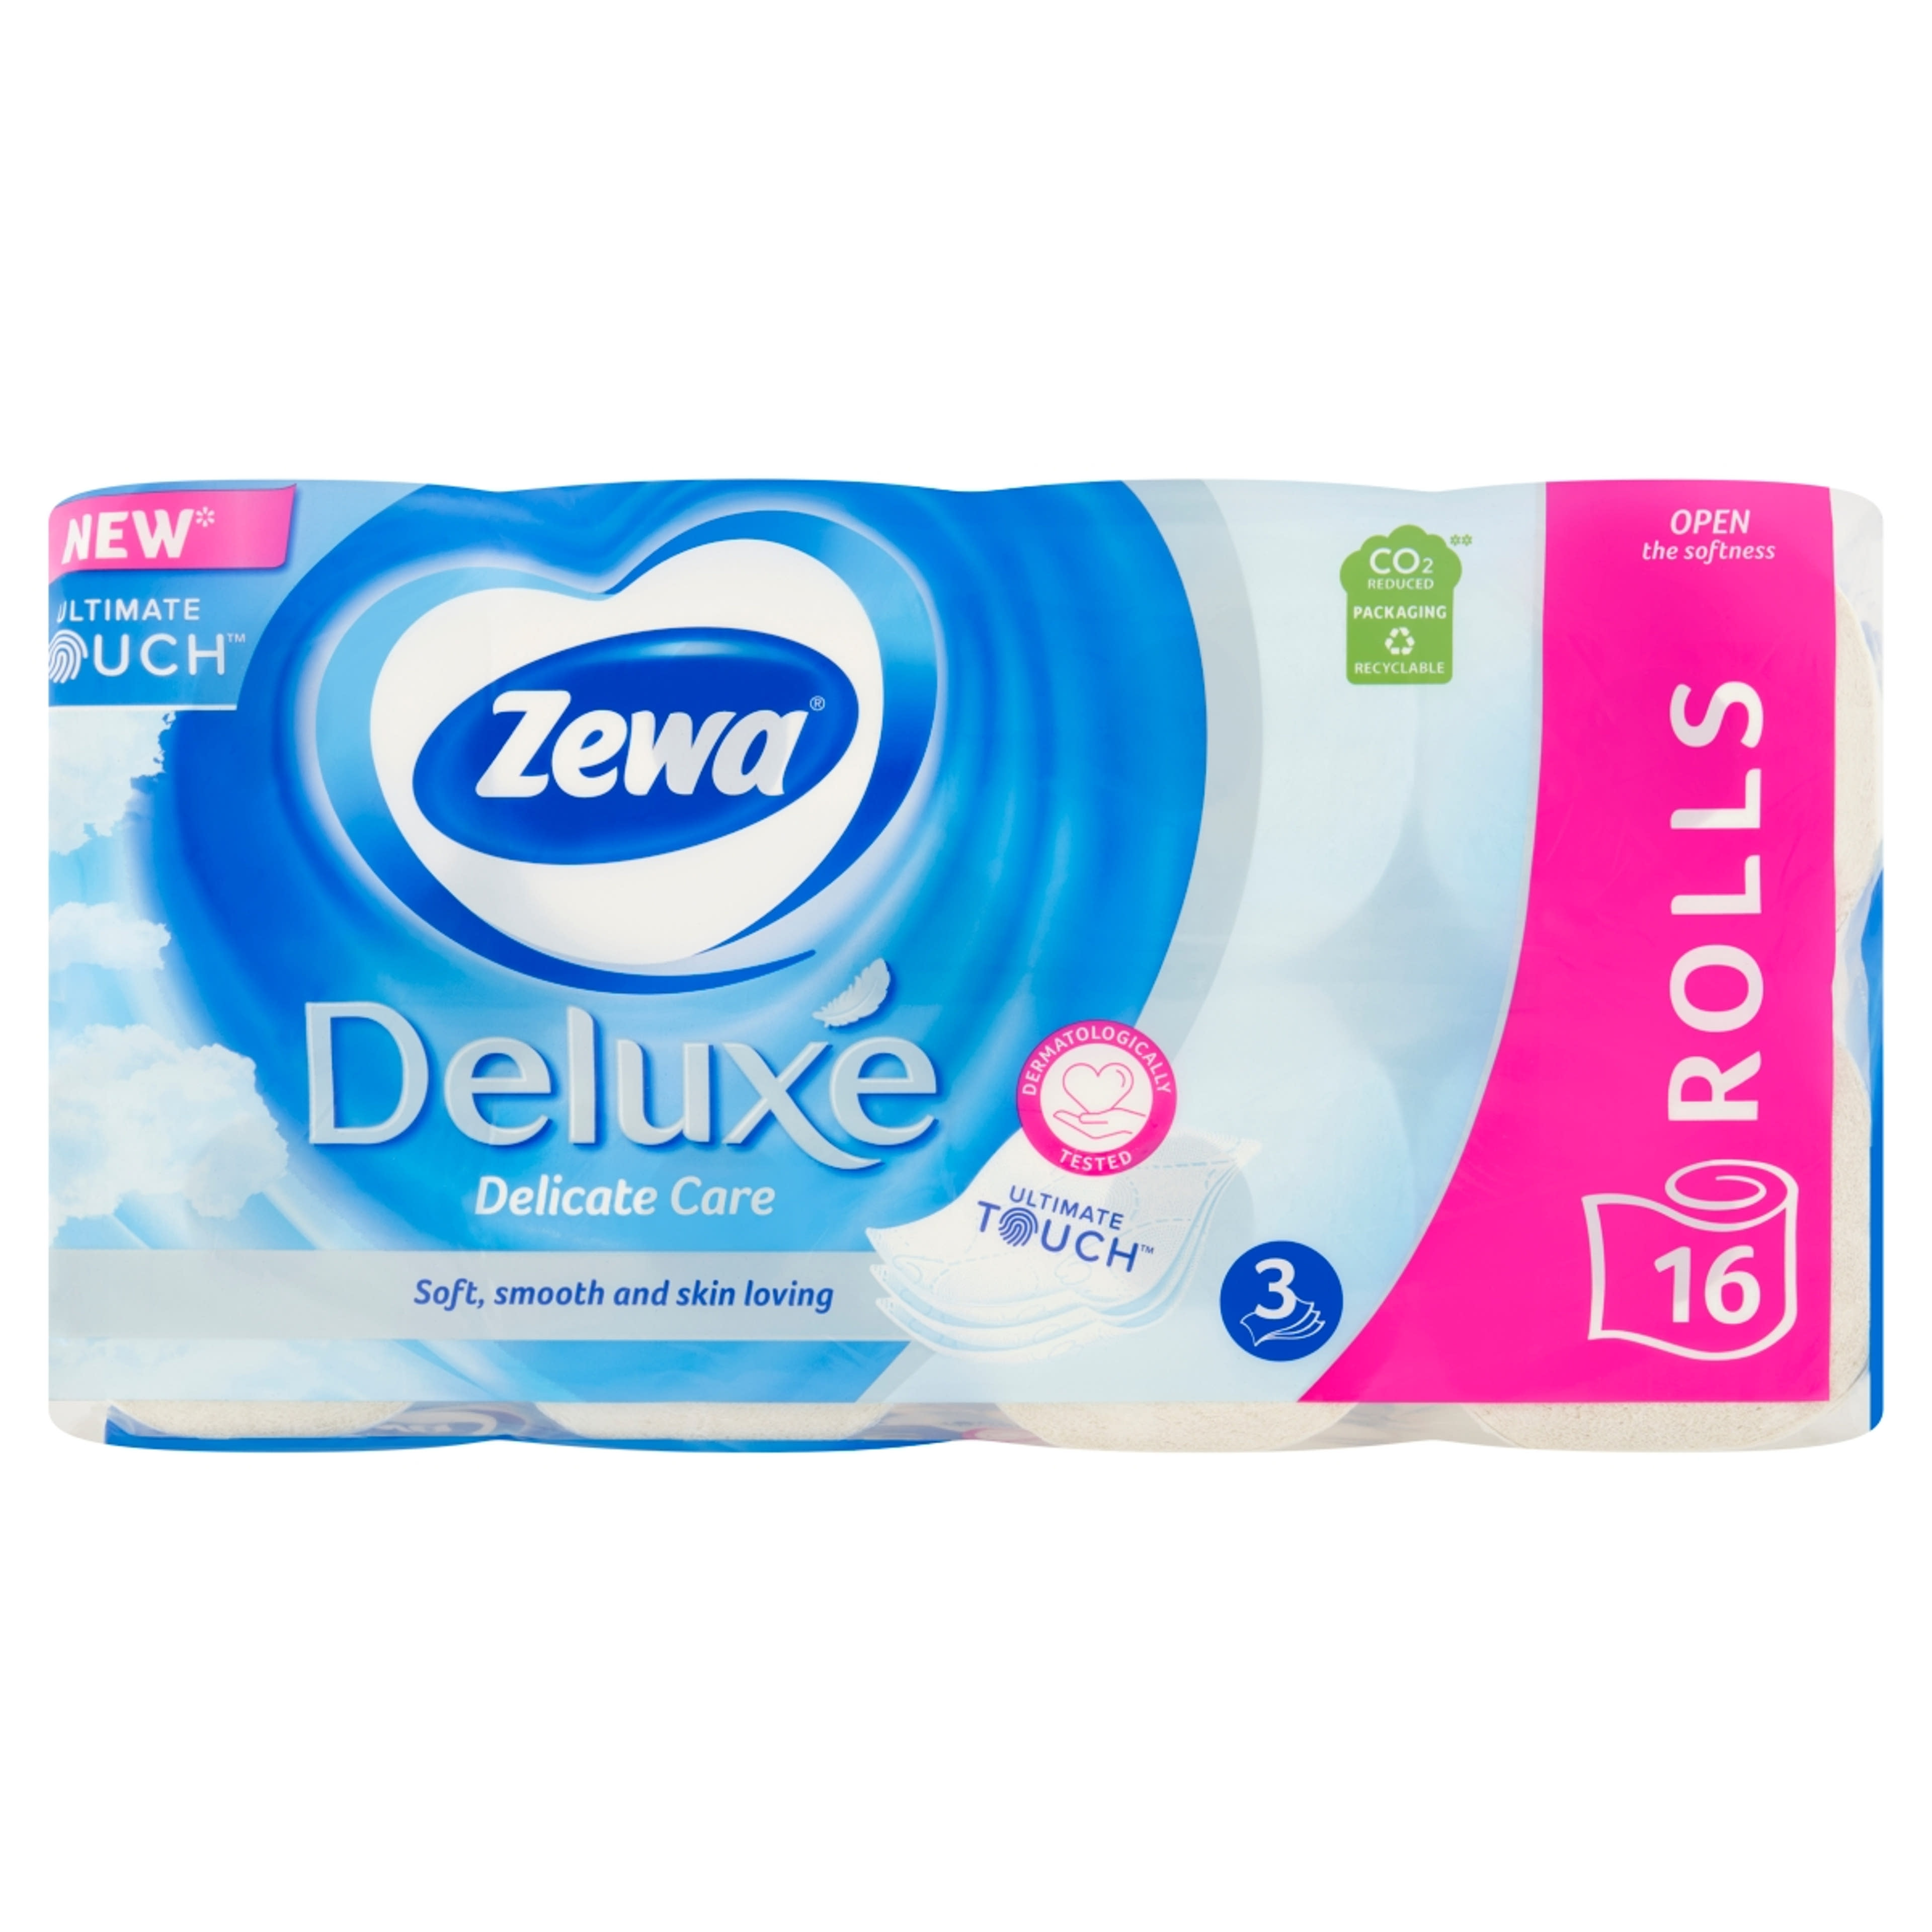 Zewa Deluxe Delicate Care 3 Rétegű Toalettpapír - 16 tekercs